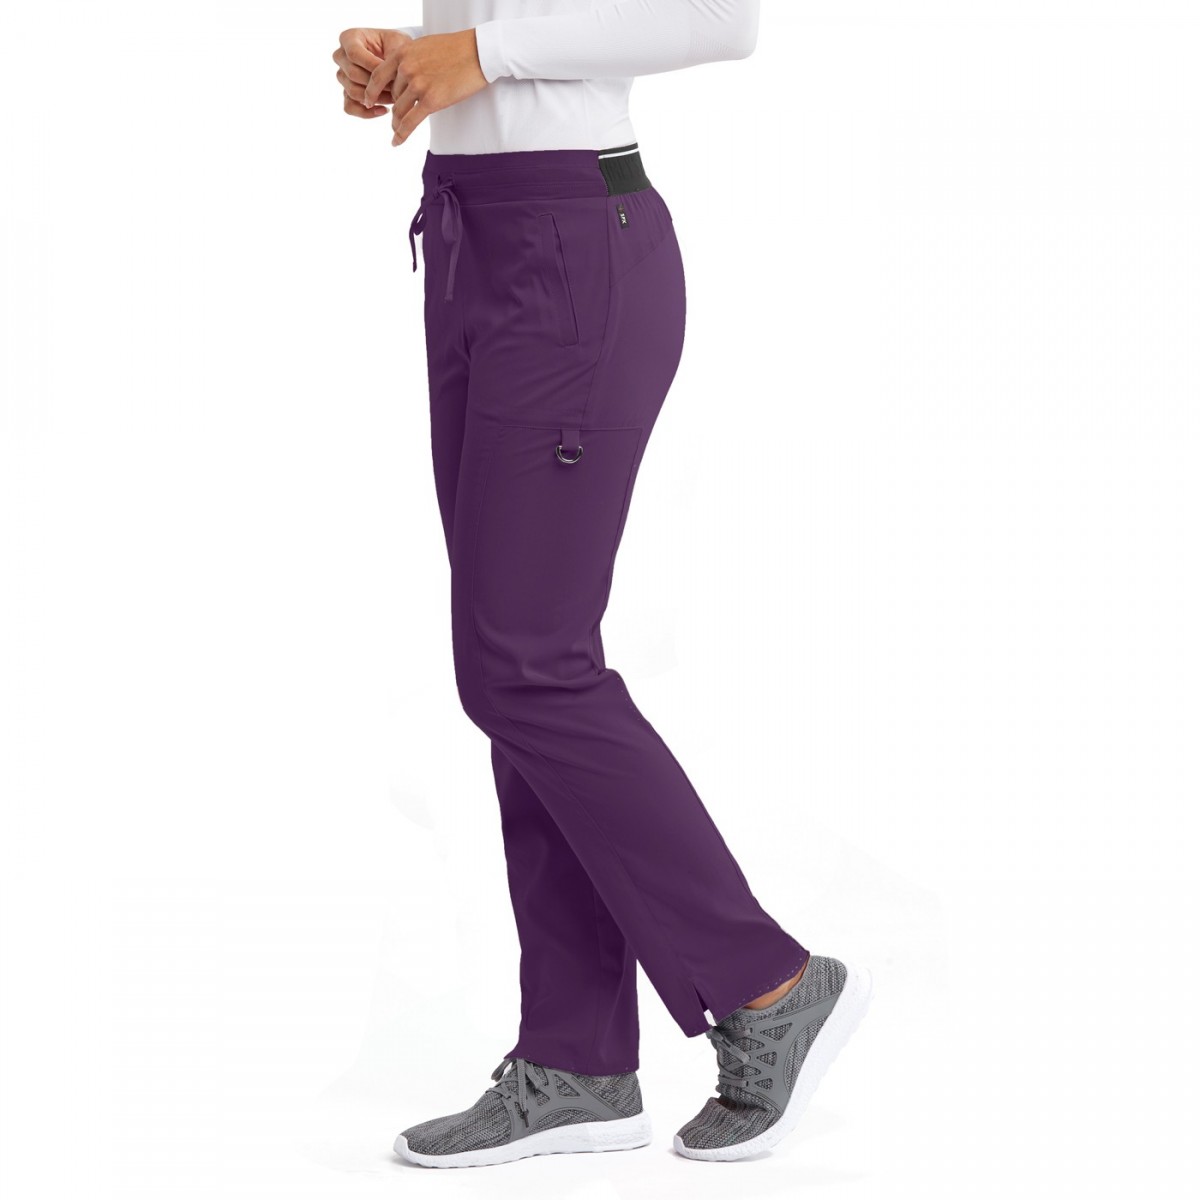 Grey's Anatomy women's scrub trousers with elastic waistband - eggplant